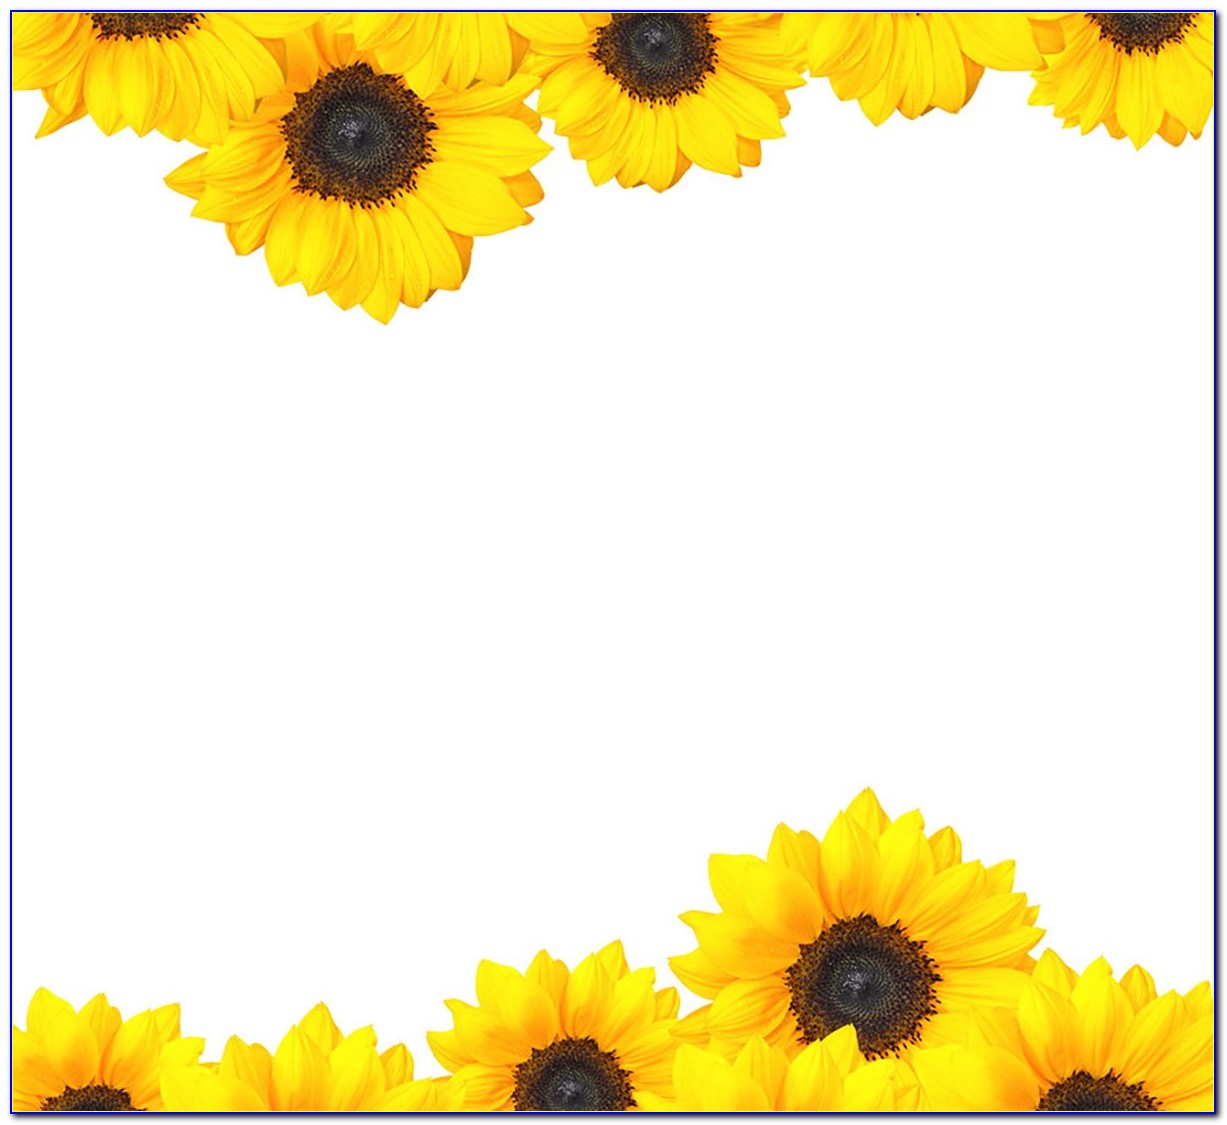 Sunflower Invitation Template Free